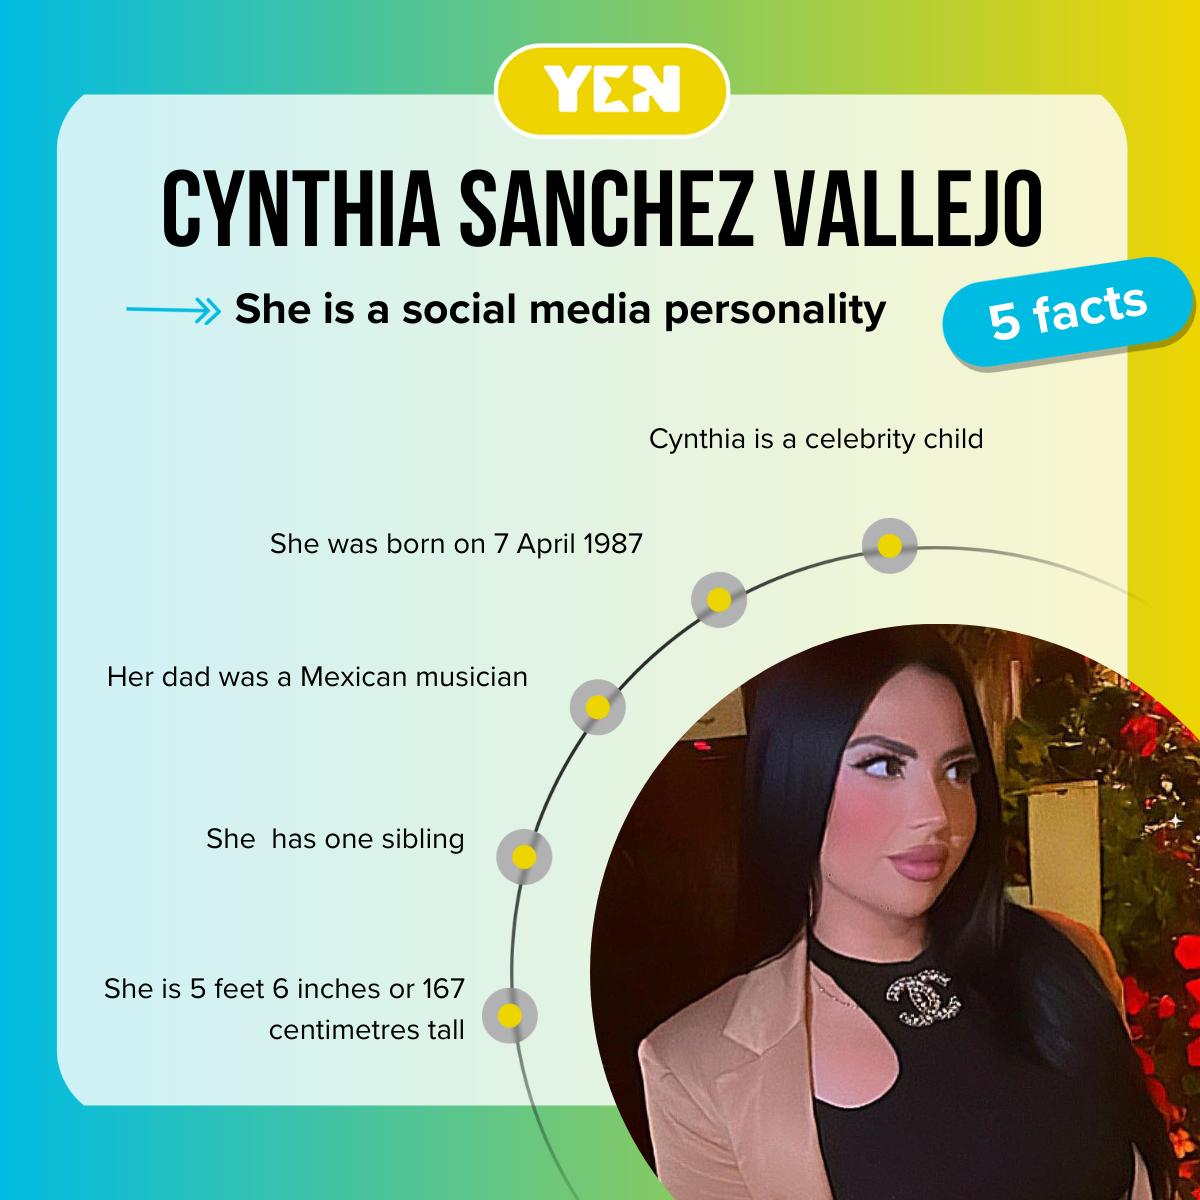 Five facts about Cynthia Sanchez Vallejo